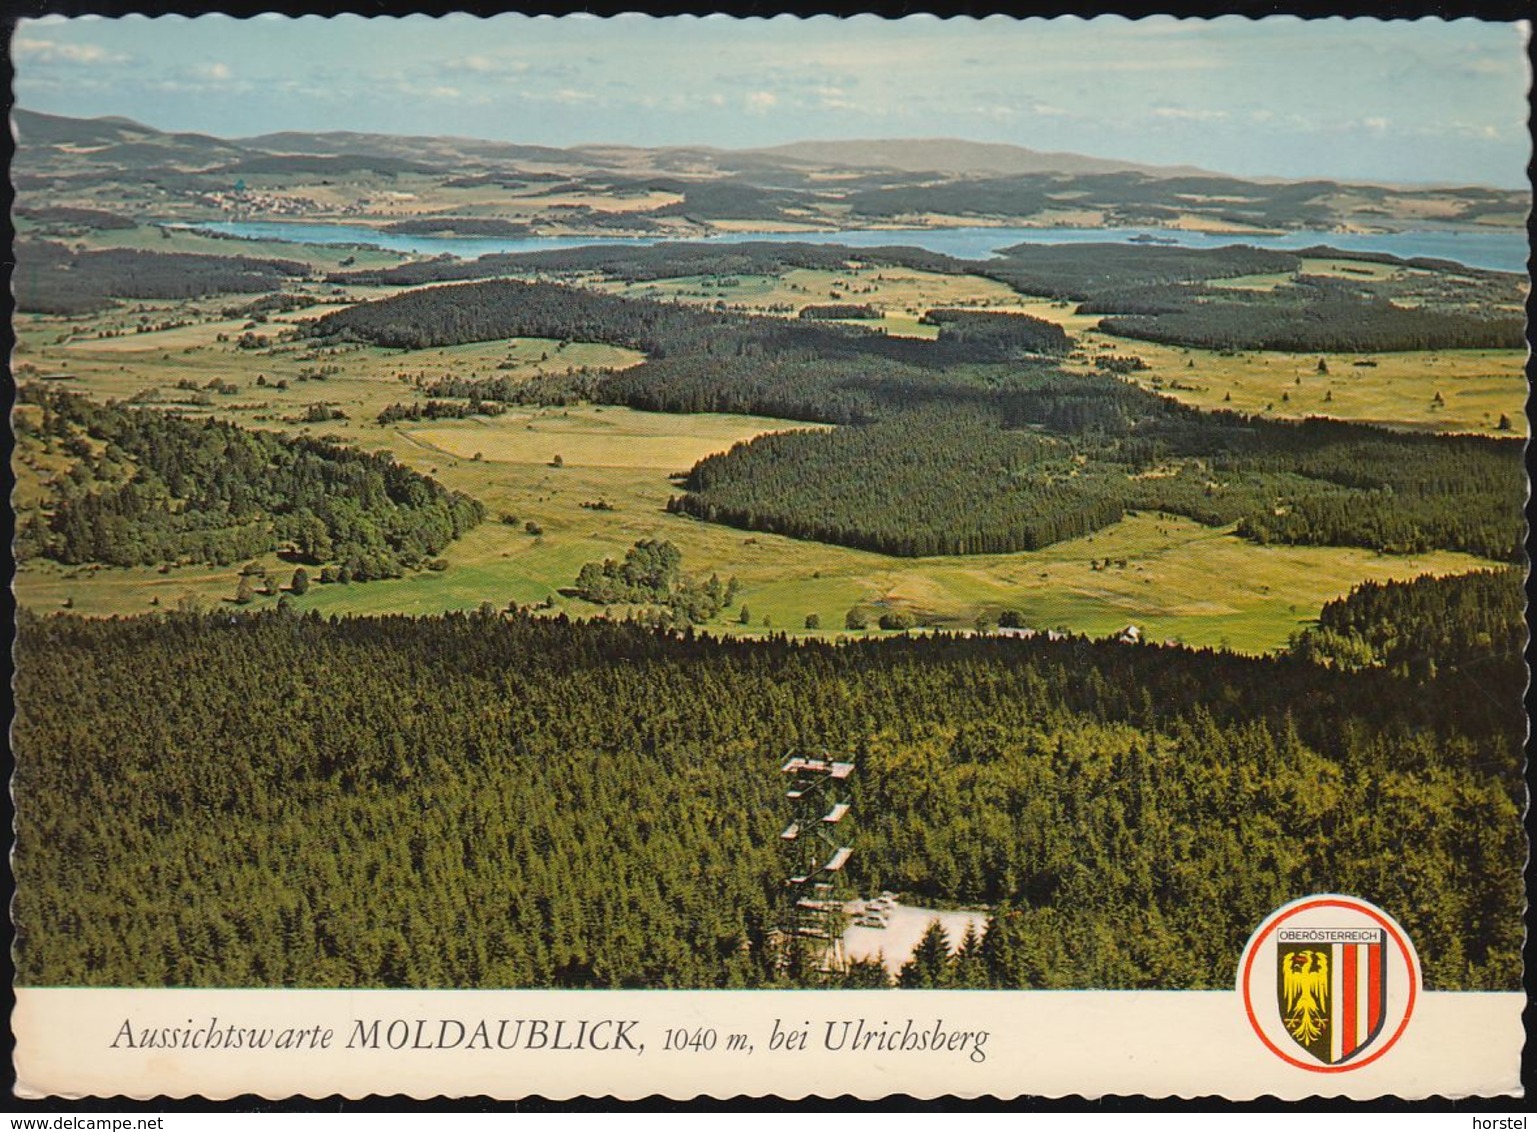 Austria - 4161 Ulrichsberg - Aussichtswarte Moldaublick - Wappen - Rohrbach